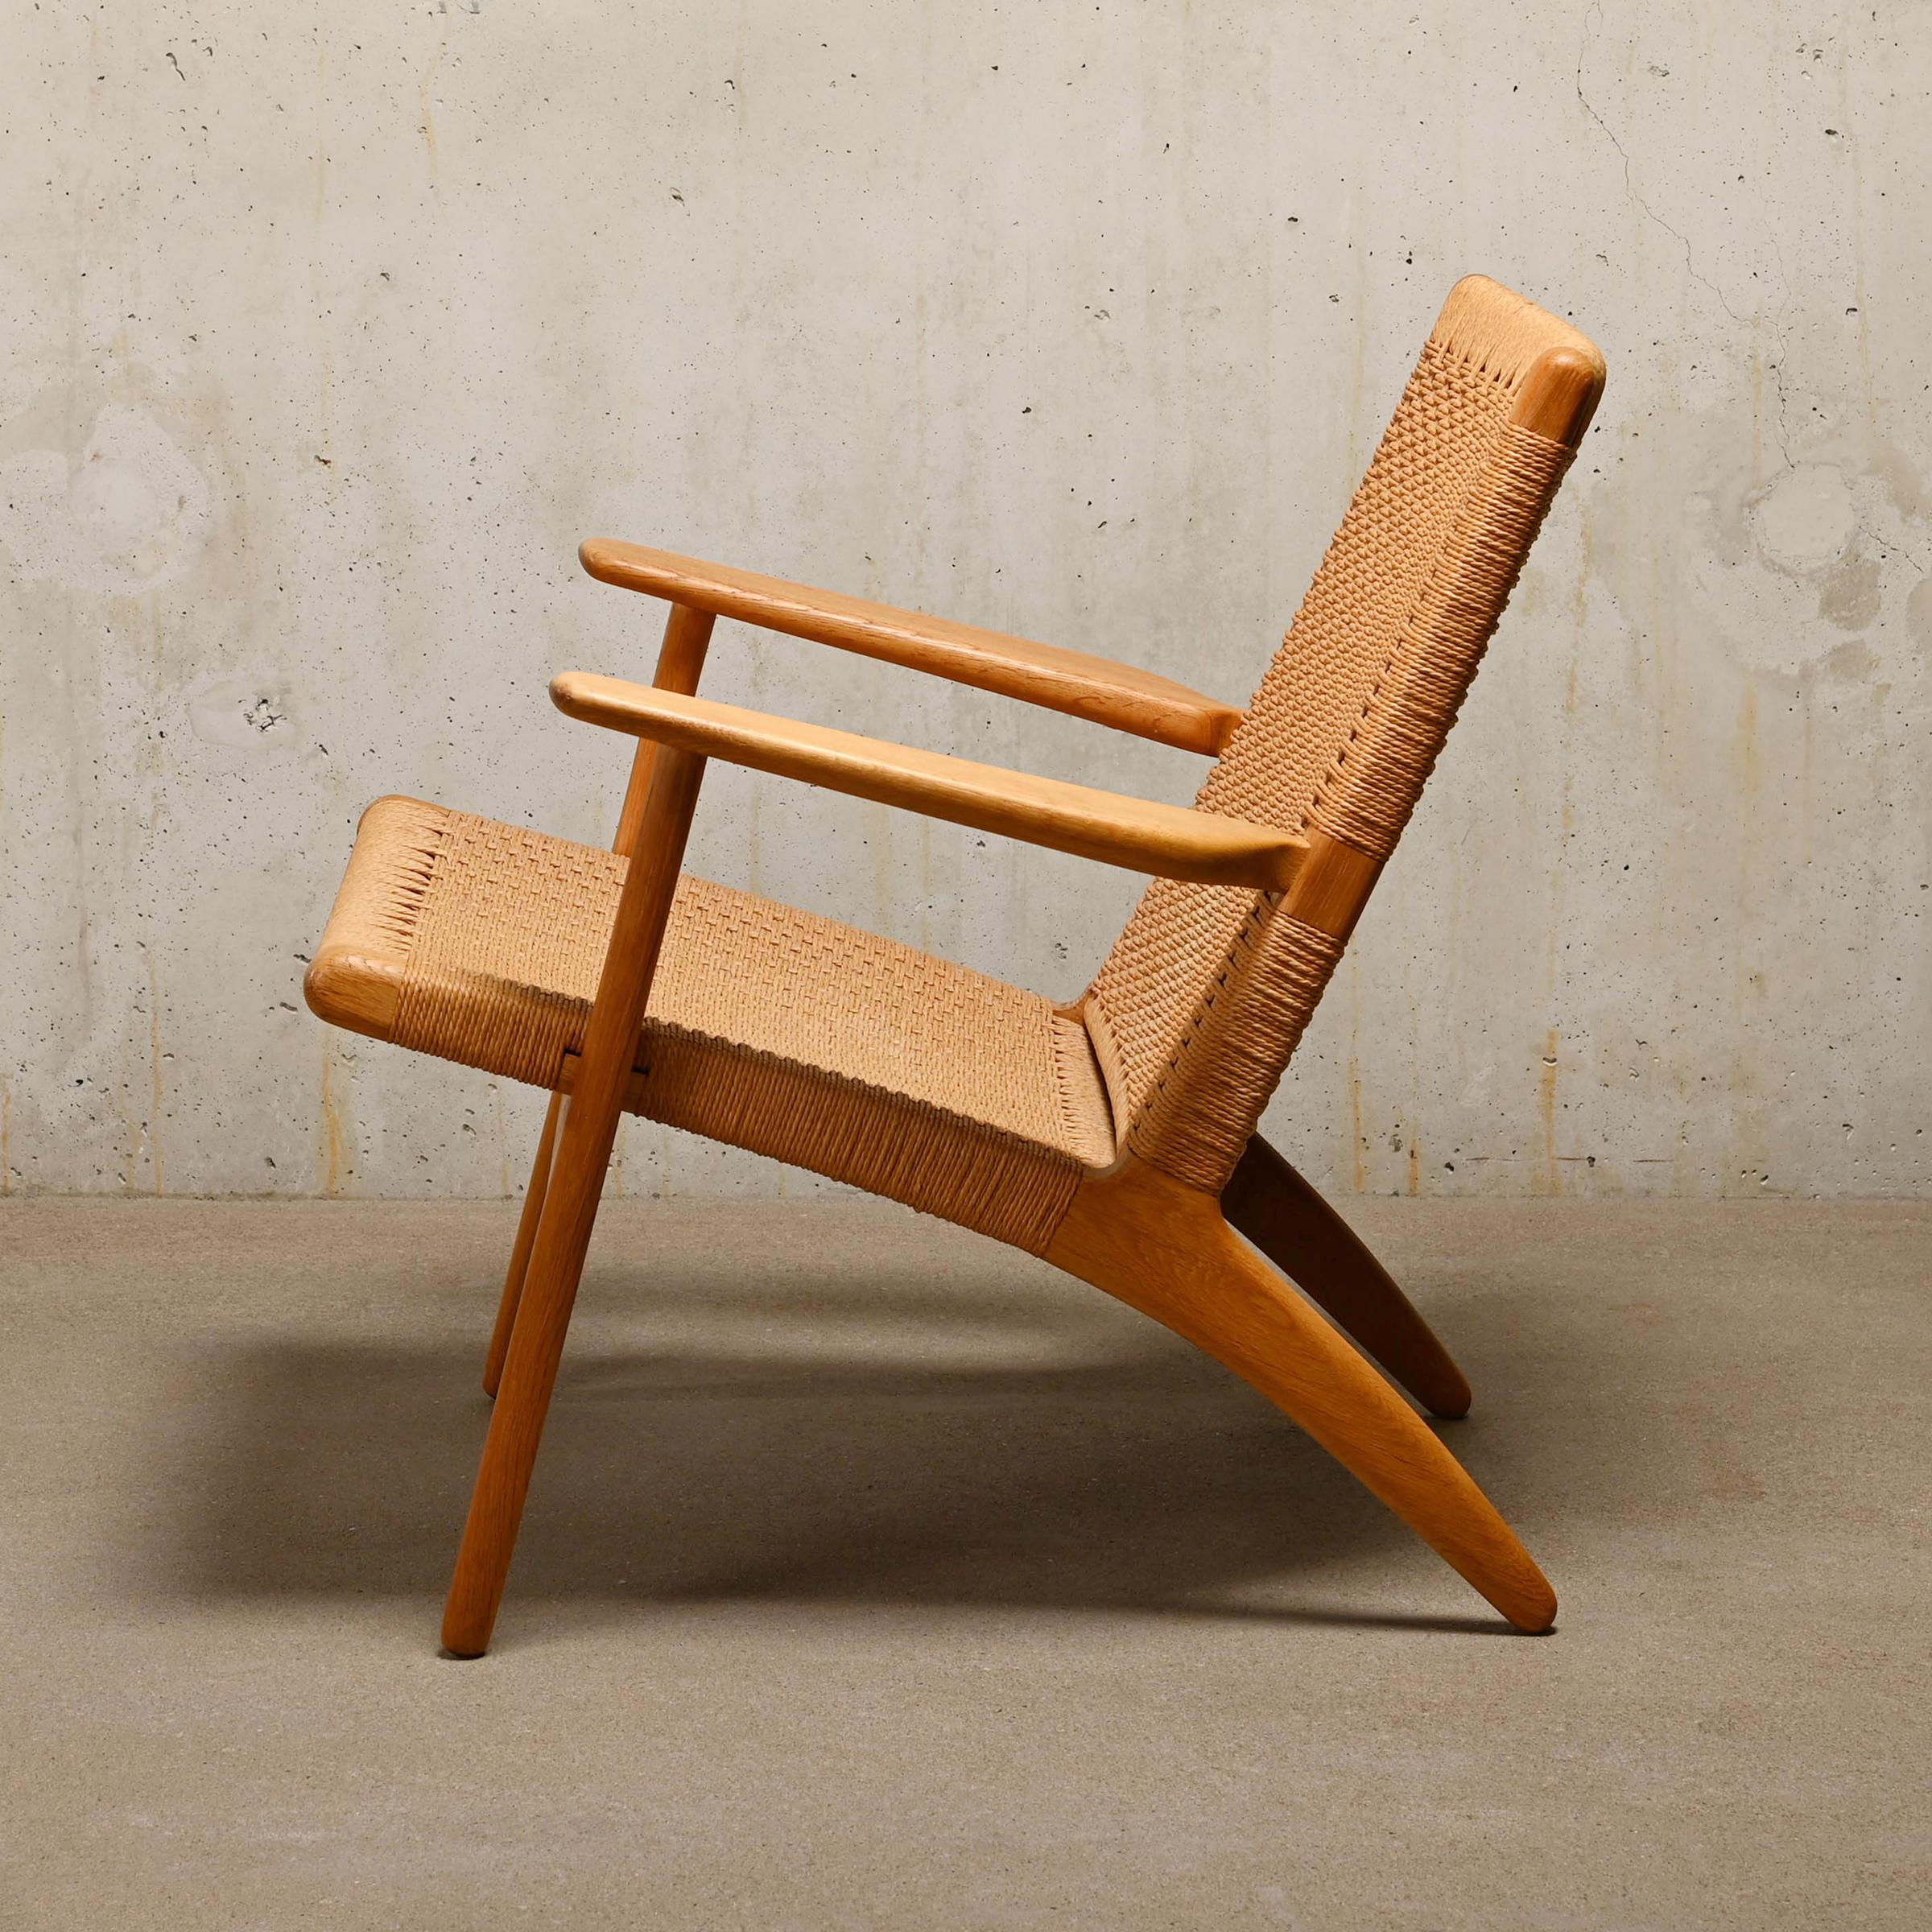 Danish Hans J. Wegner CH25 Lounge Chair in oak and paper-cord for Carl Hansen & Son